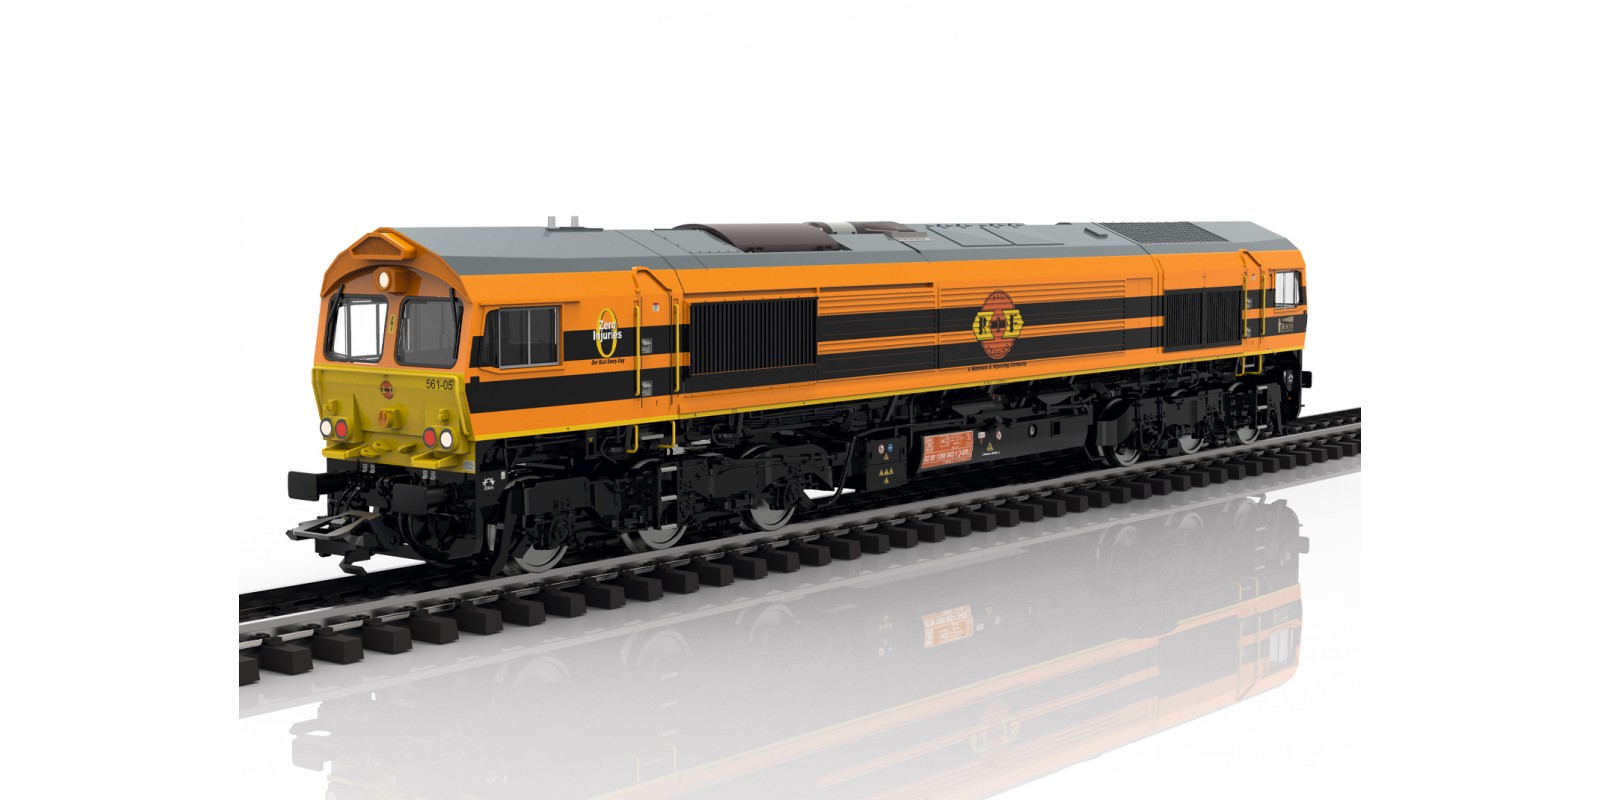 39061 Class 66 Diesel Locomotive